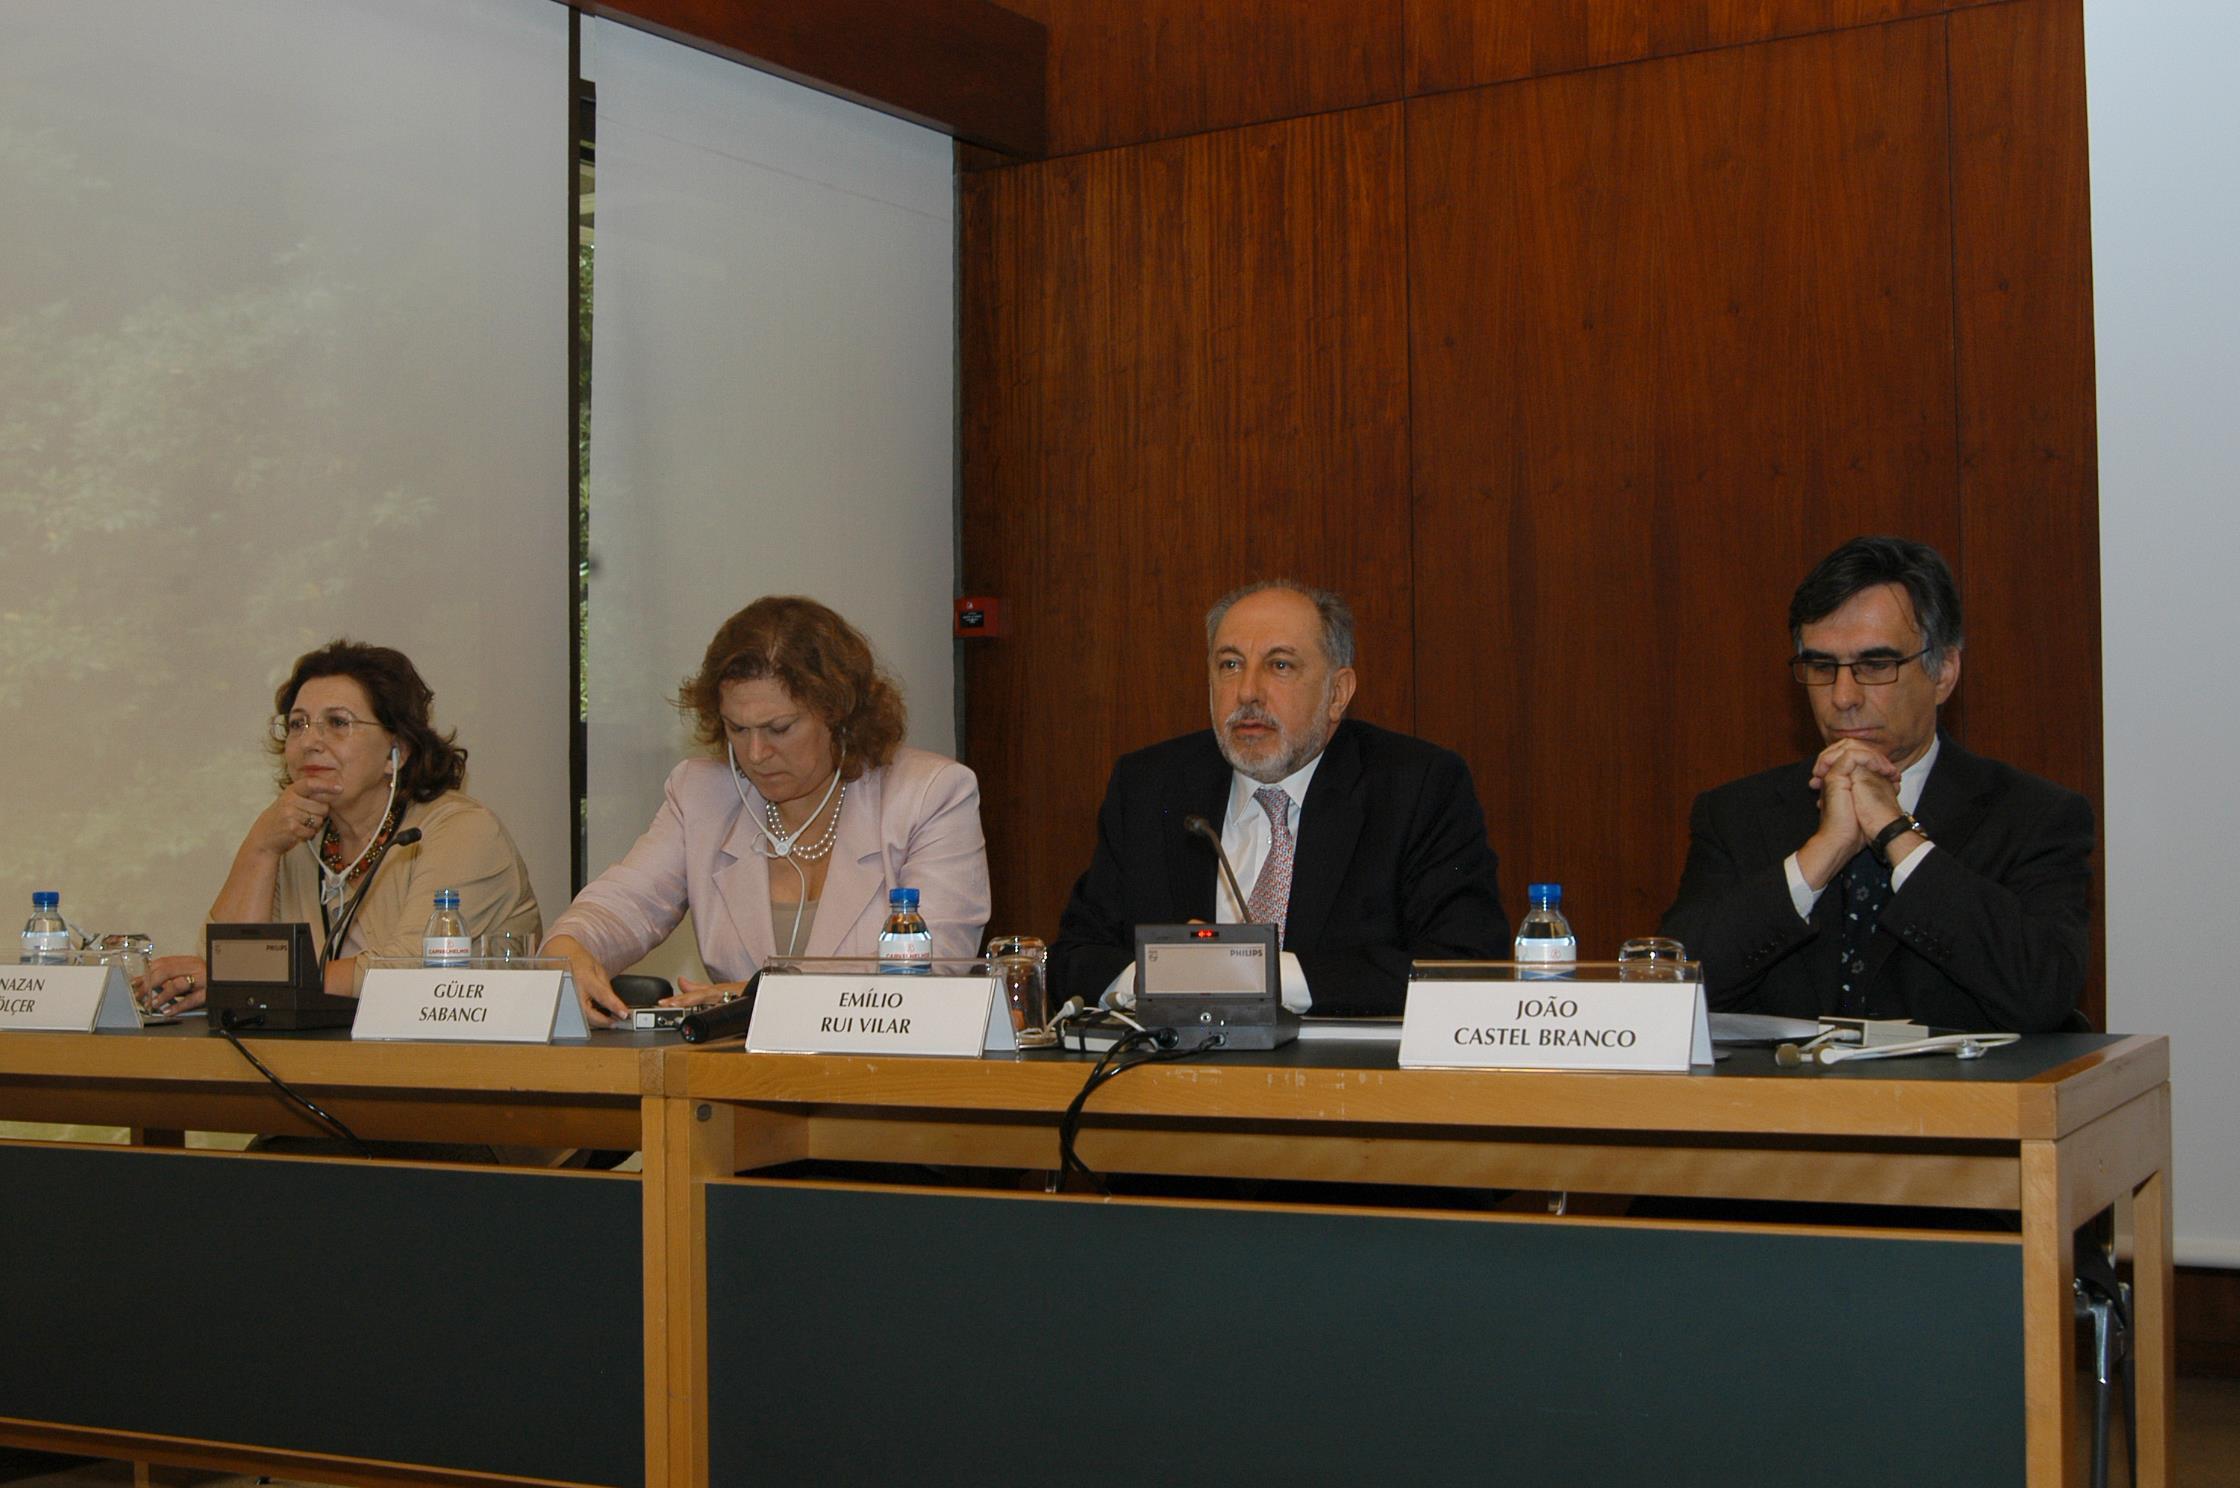 Conferência de imprensa. Nazan Ölçer, Güler Sabanci, Emílio Rui Vilar e João Castel-Branco Pereira